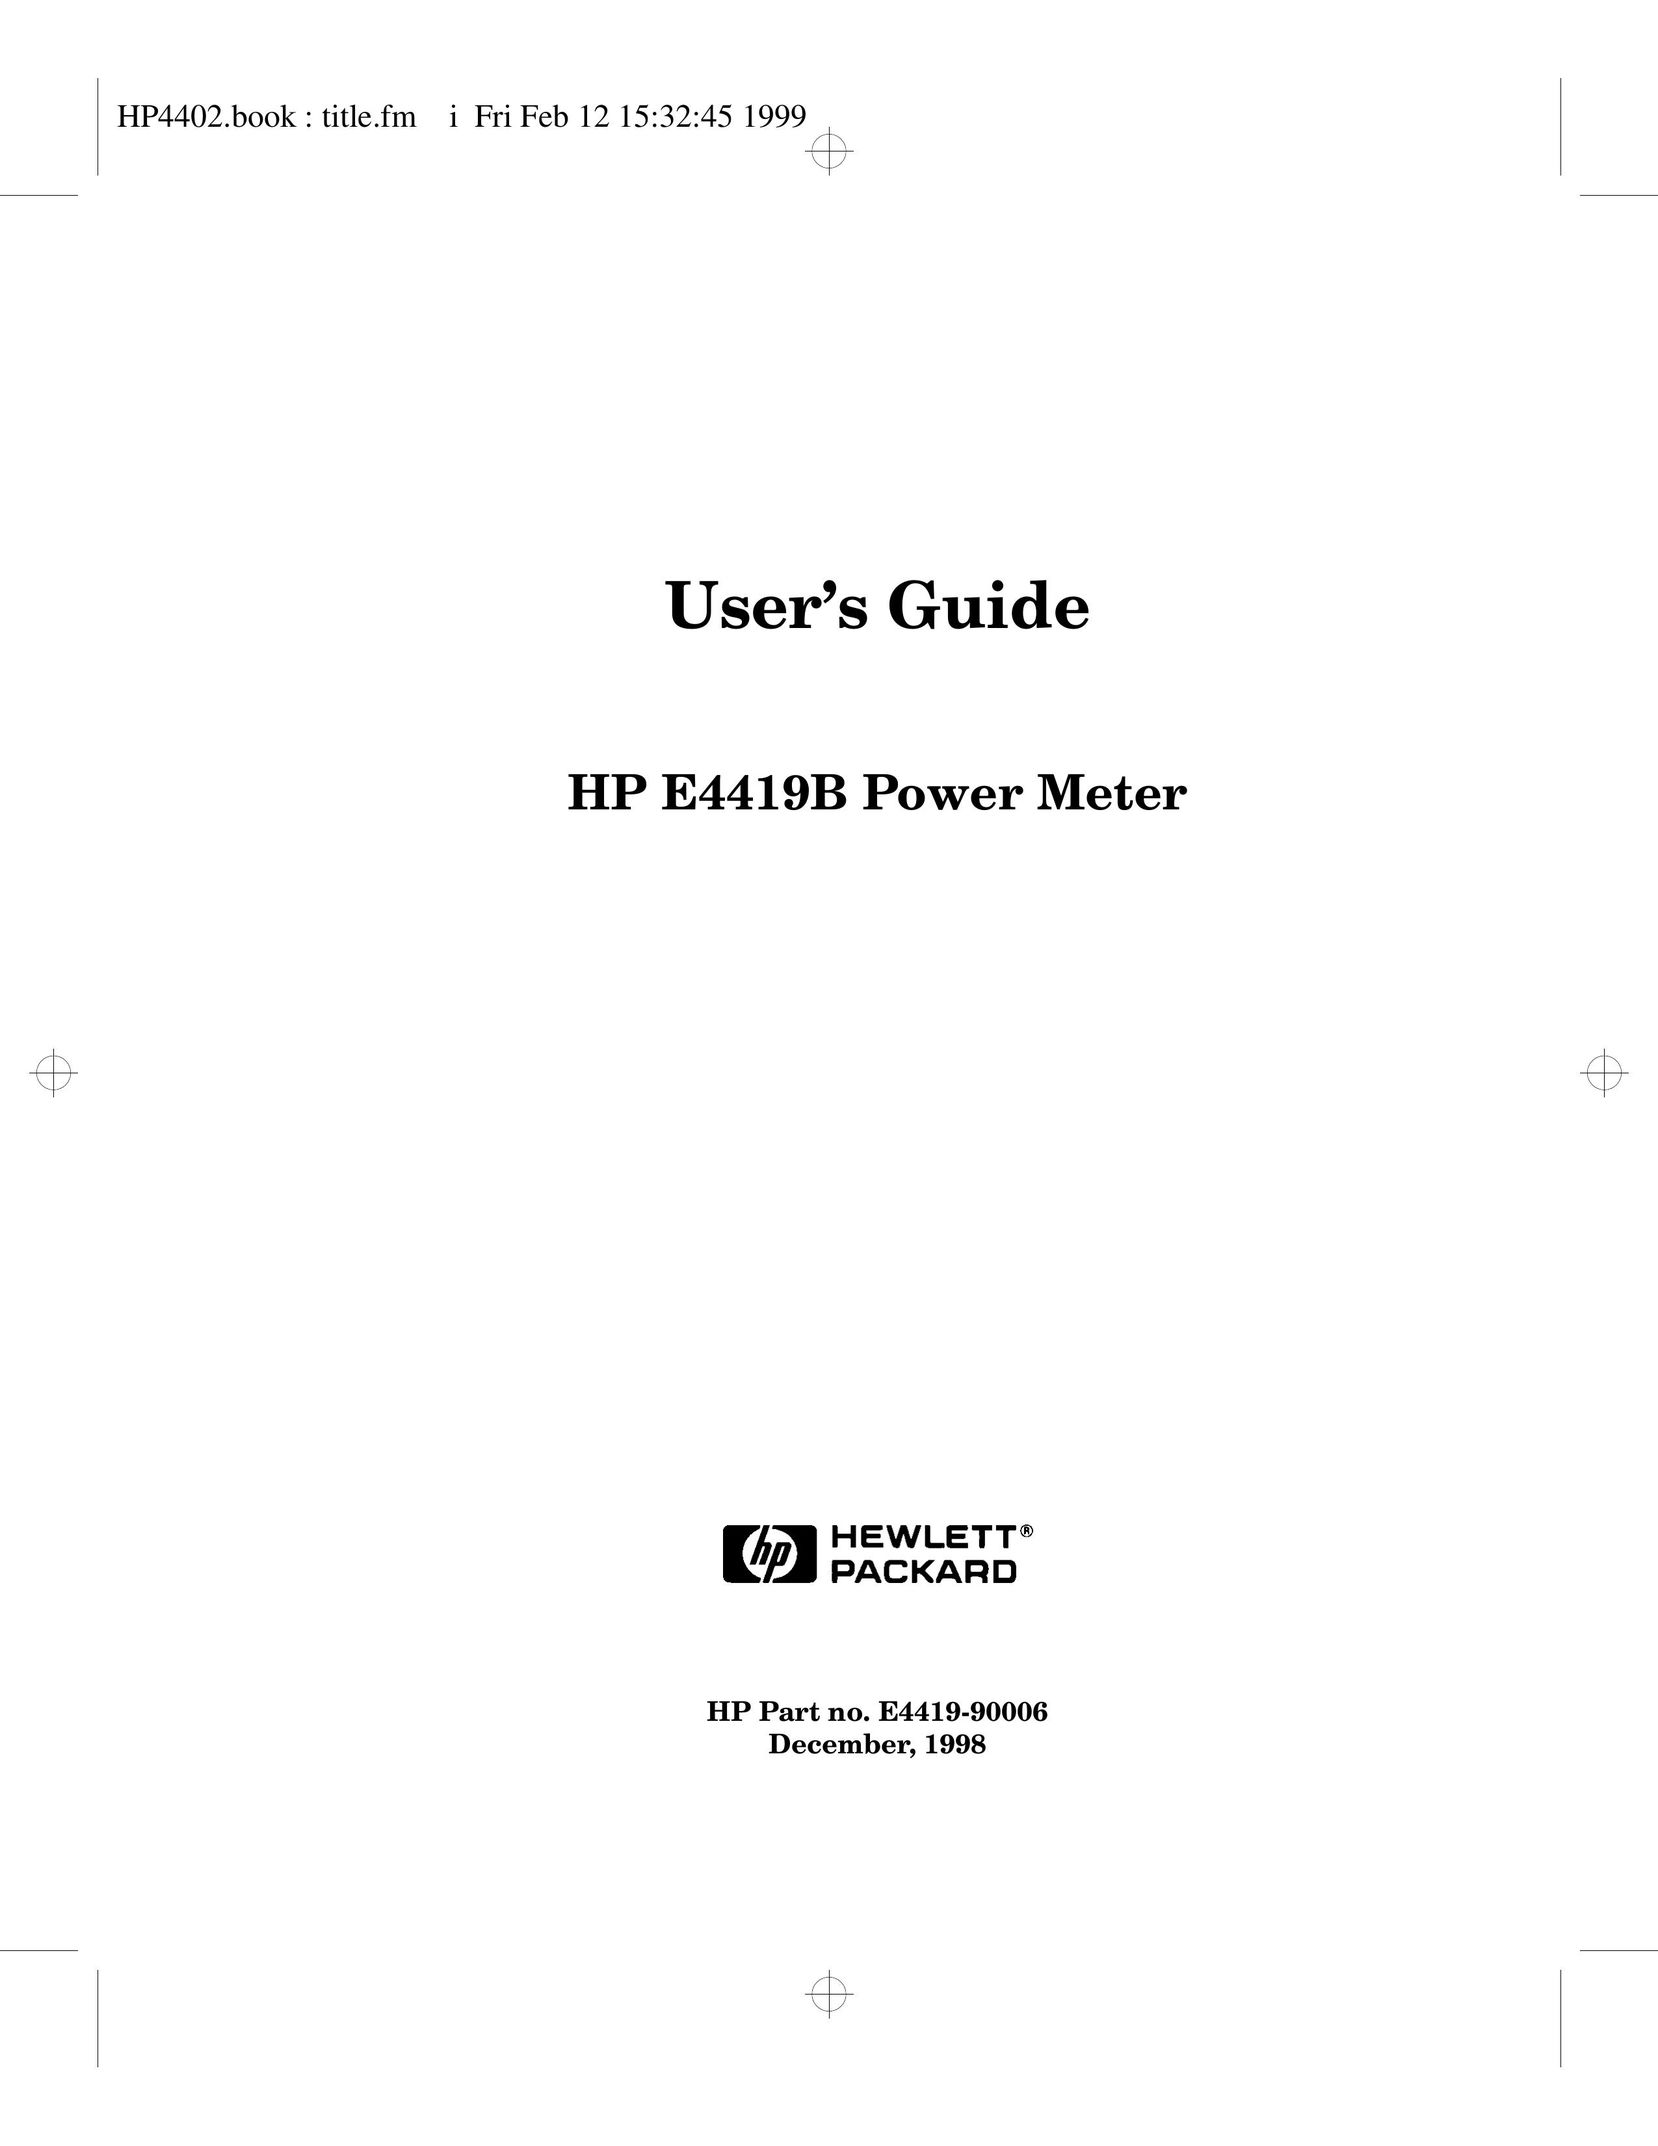 HP (Hewlett-Packard) HP E4419B Saw User Manual